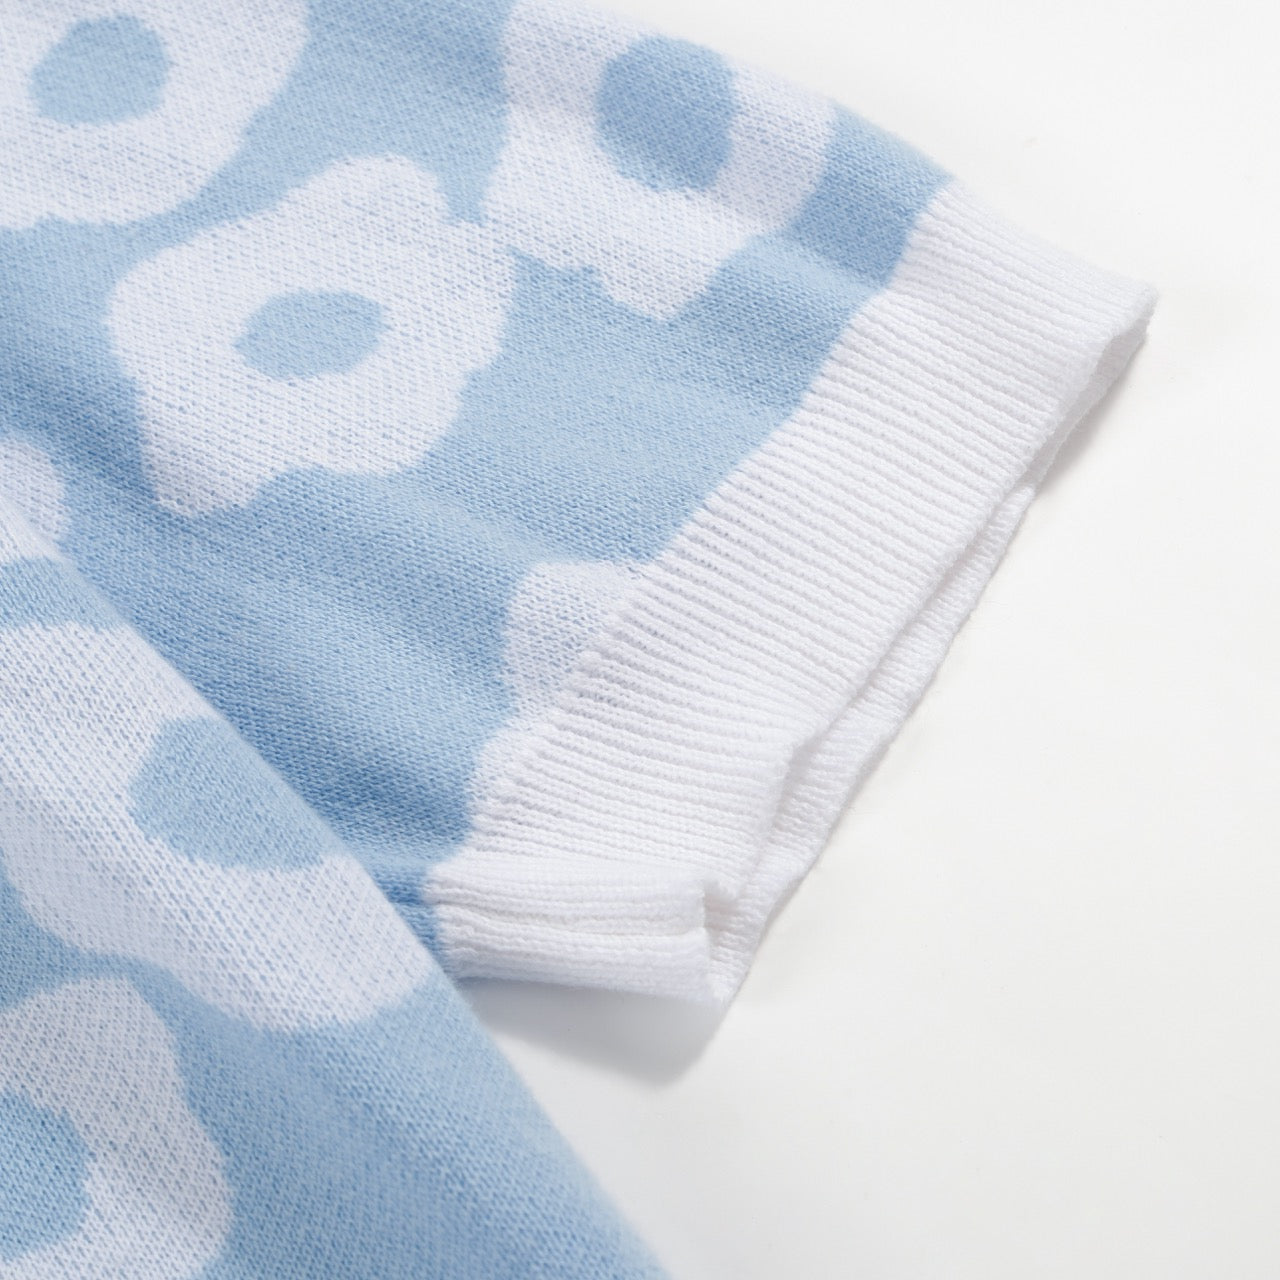 Men's Sky Blue And White Jacquard Design Knitted Short Sleeve Polo Shirt